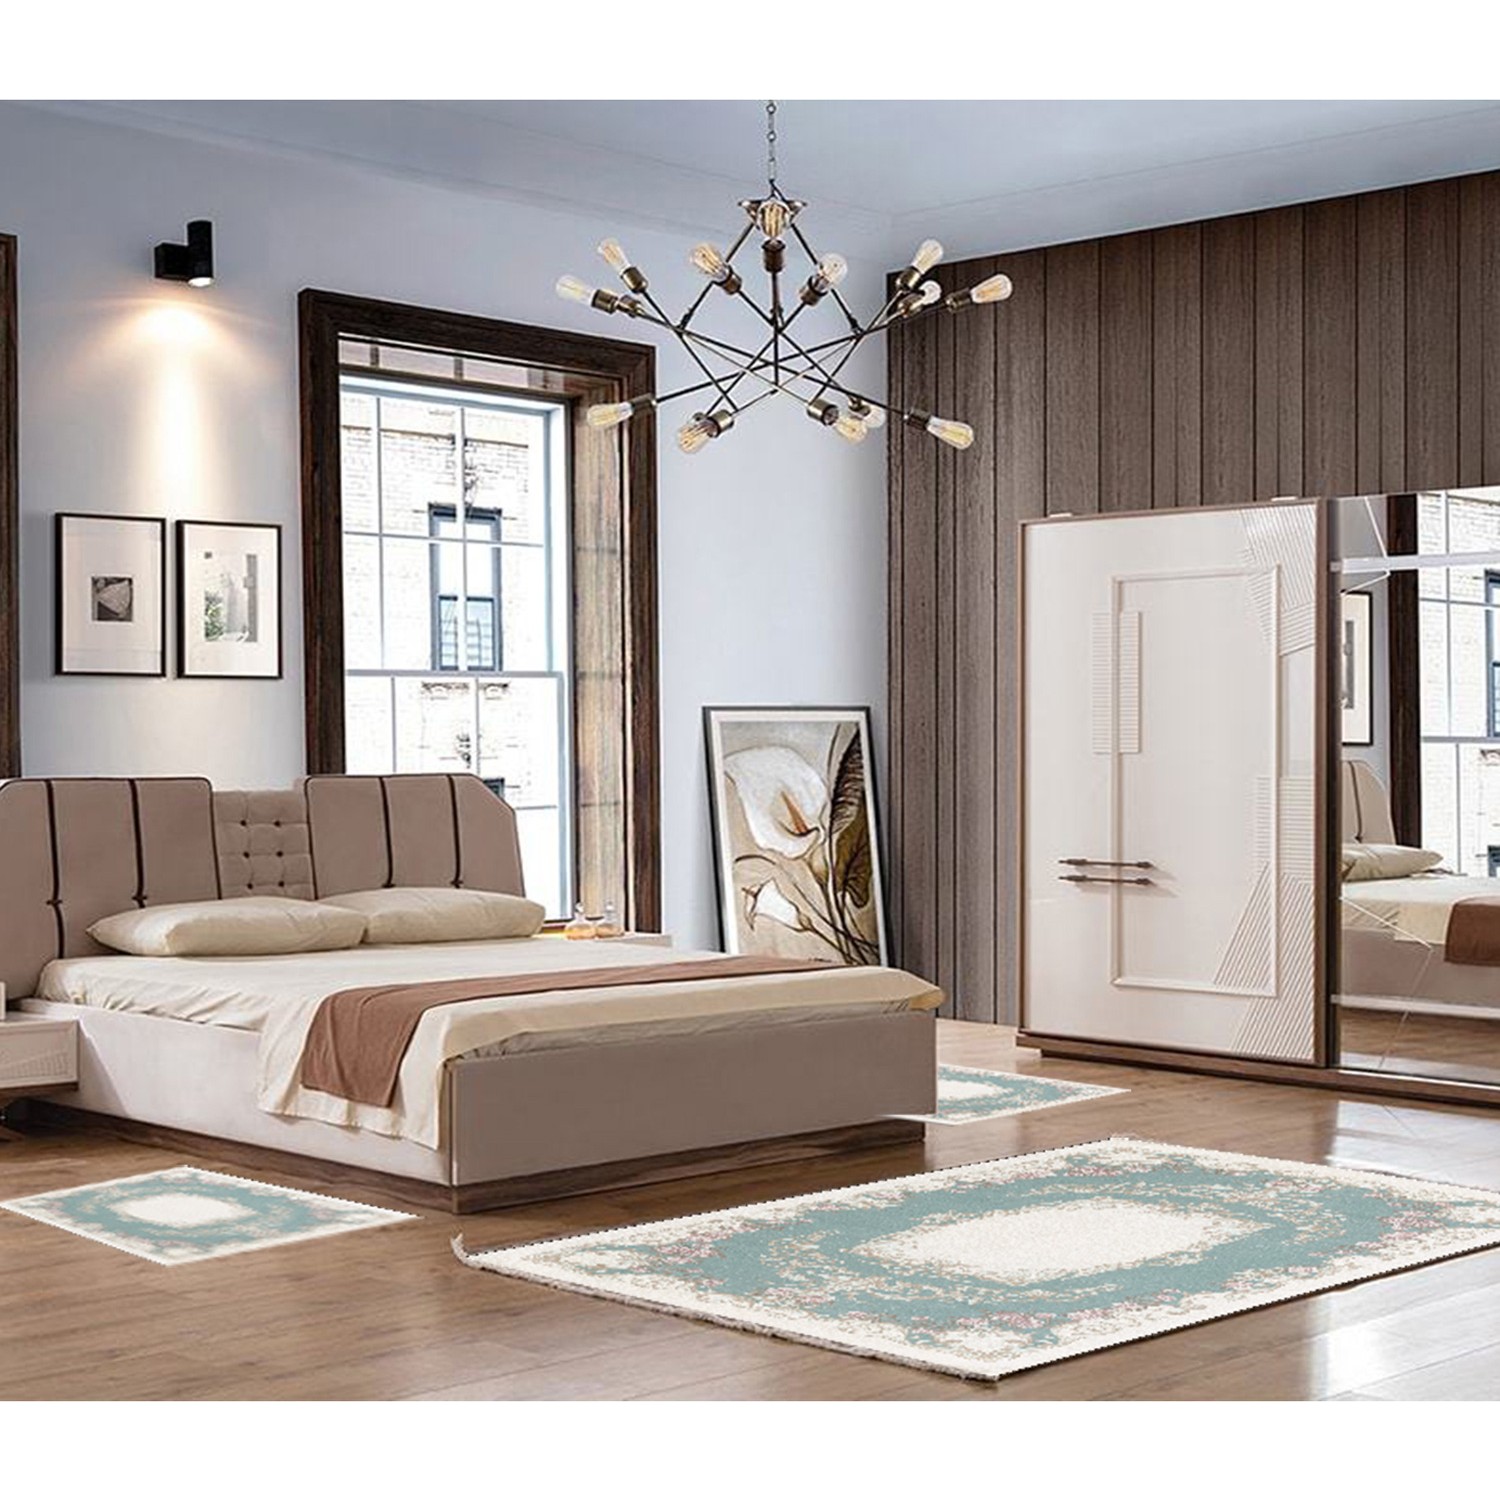 Alanur Almira Yatak Odası Halısı 3�lü Set 80 x 150 cm + 2 Fiyatı